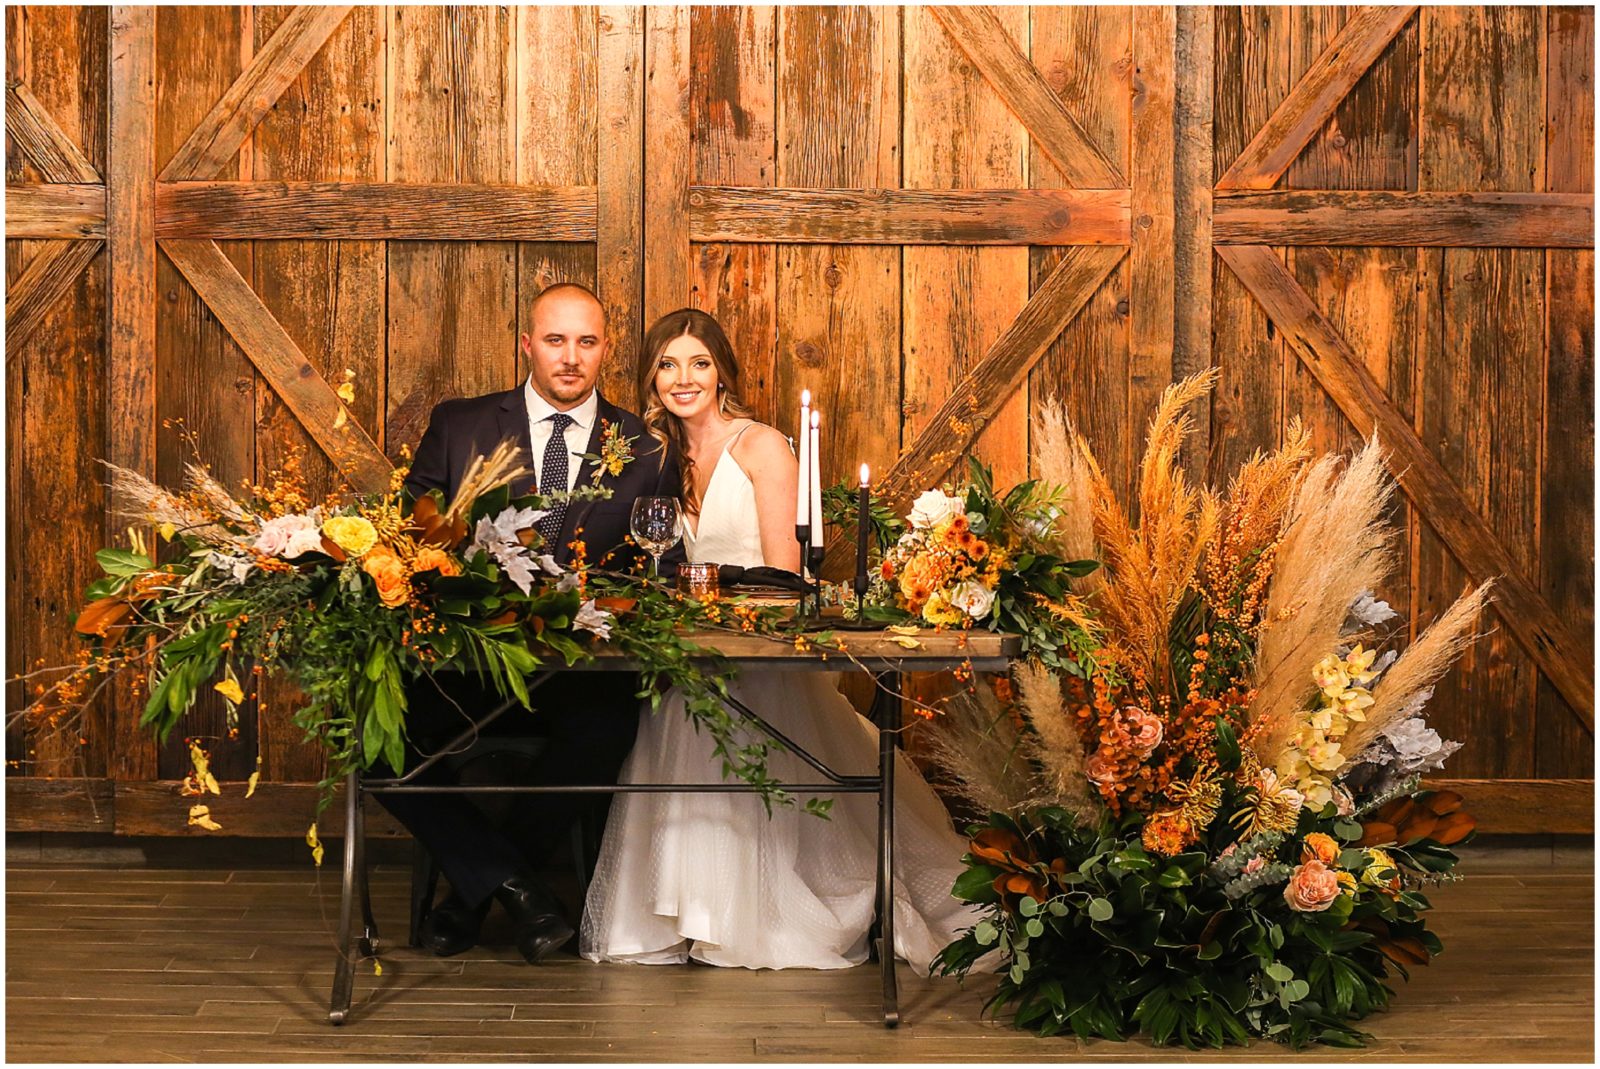 The Barn at Riverbend - Barn wedding IN KANSAS CITY - BRIDE AND GROOM AT HEAD TABLE 